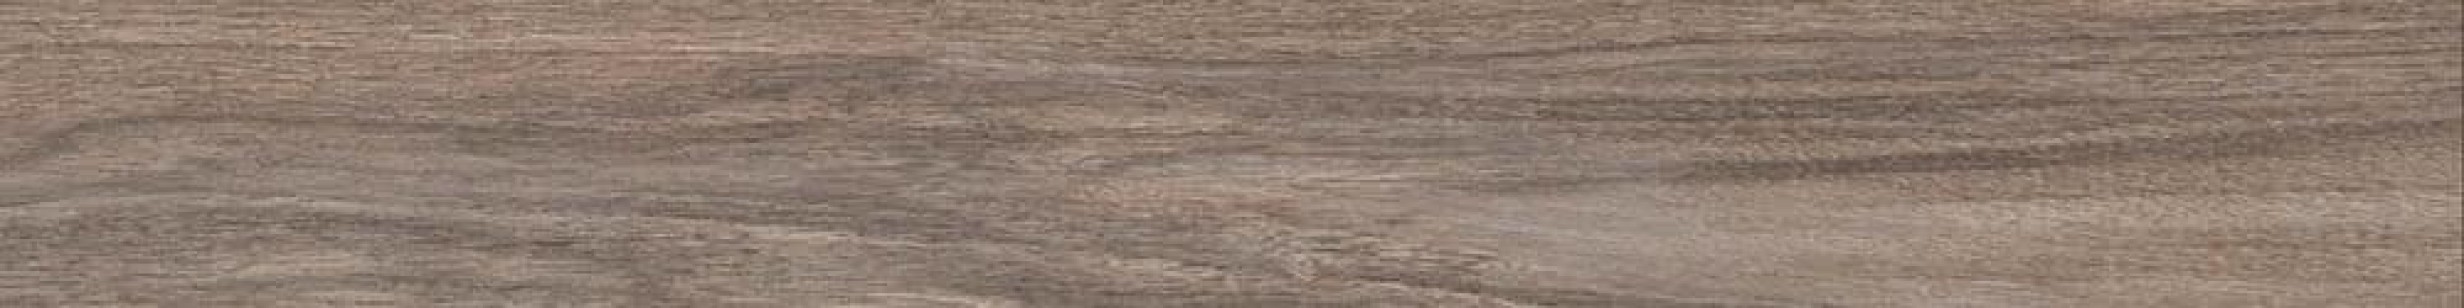 Керамогранит Casa Dolce Casa Wooden Tile Of CDC Walnut 15x120 741881